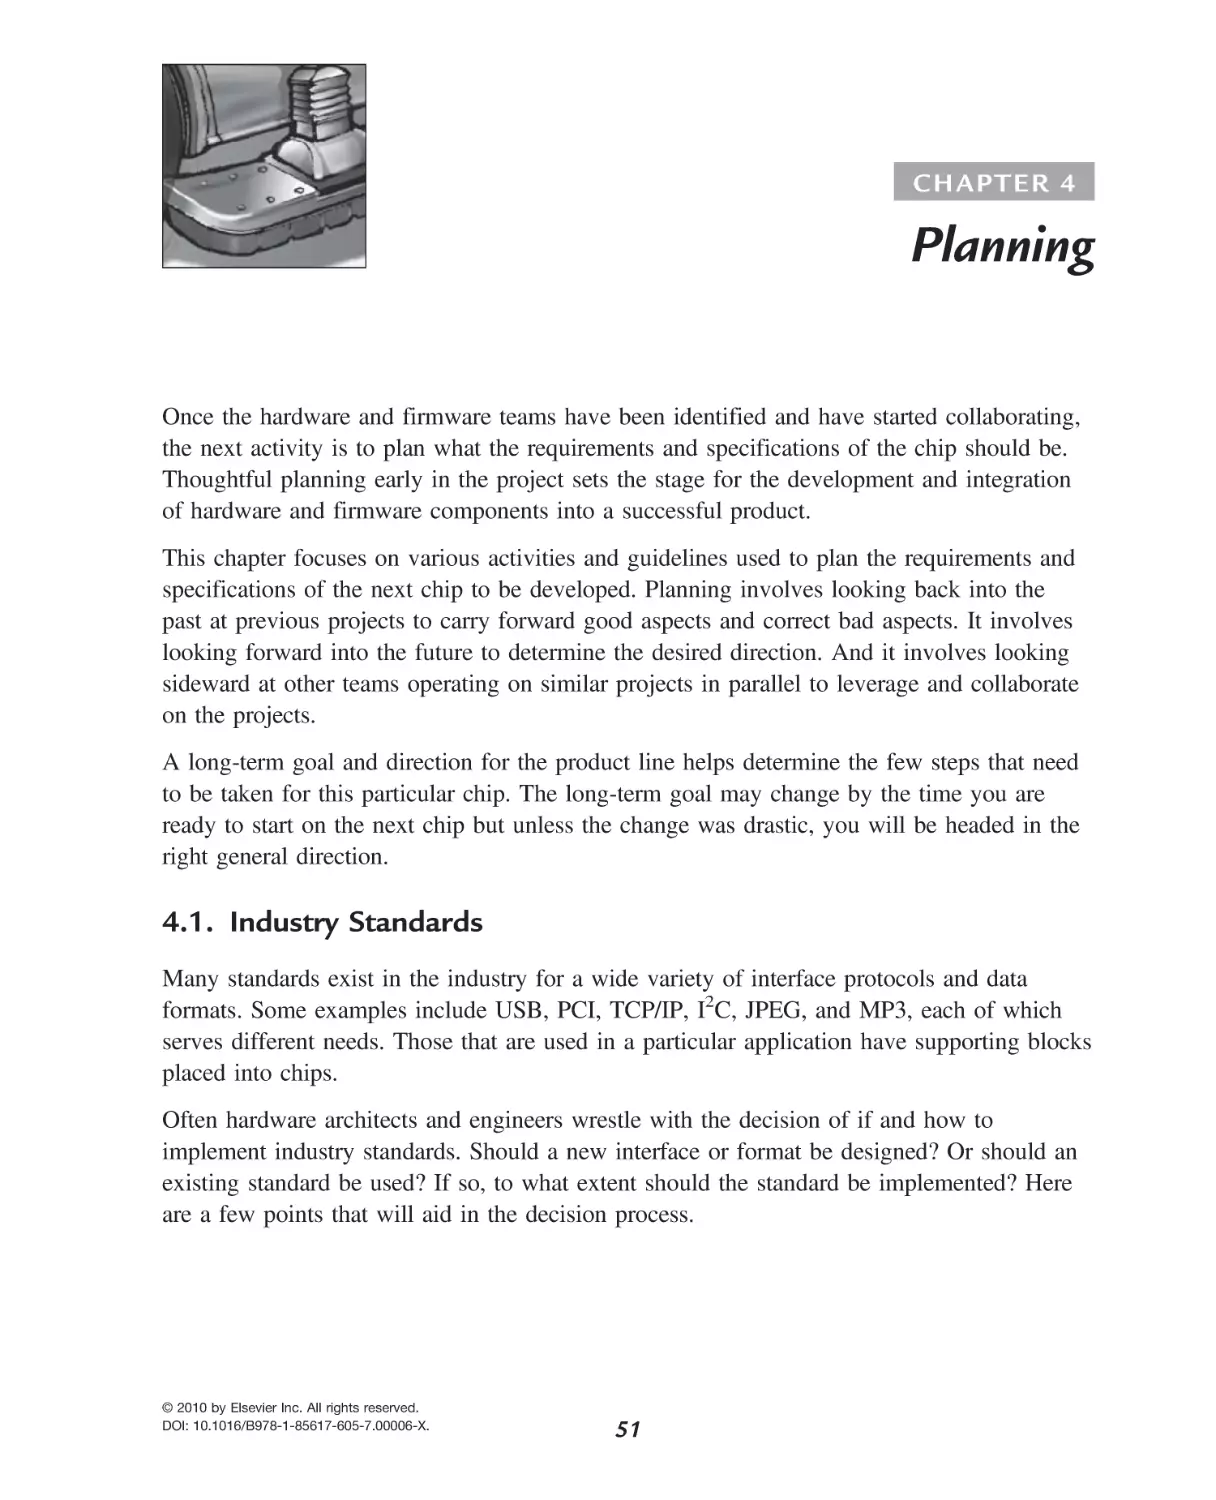 4 Planning
Industry Standards